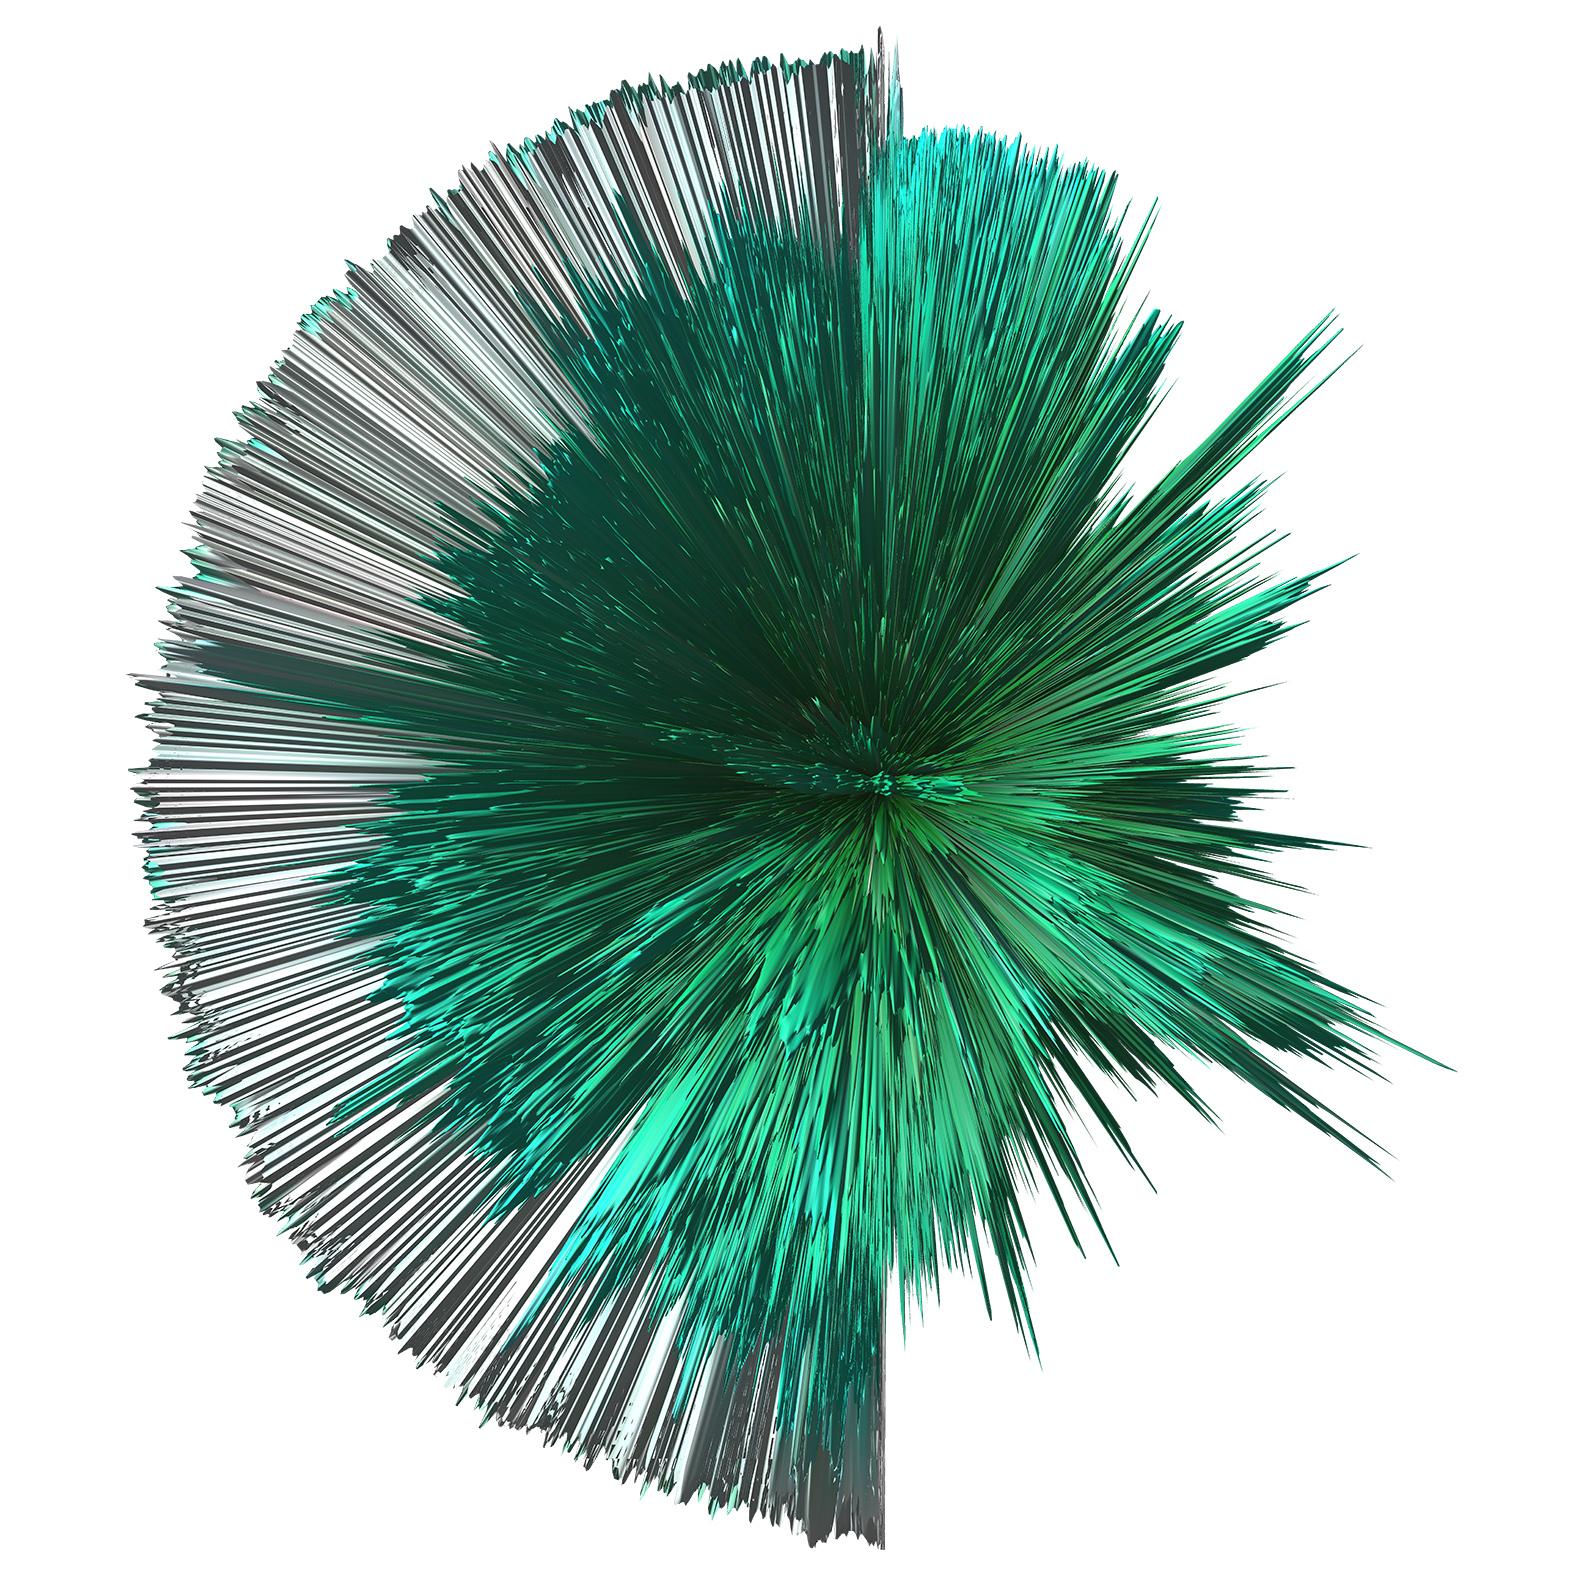 ALCHEMIST Abstract Sculpture - Contemporary digital 3D art print on selfstanding acrylic glass, Emerald Series